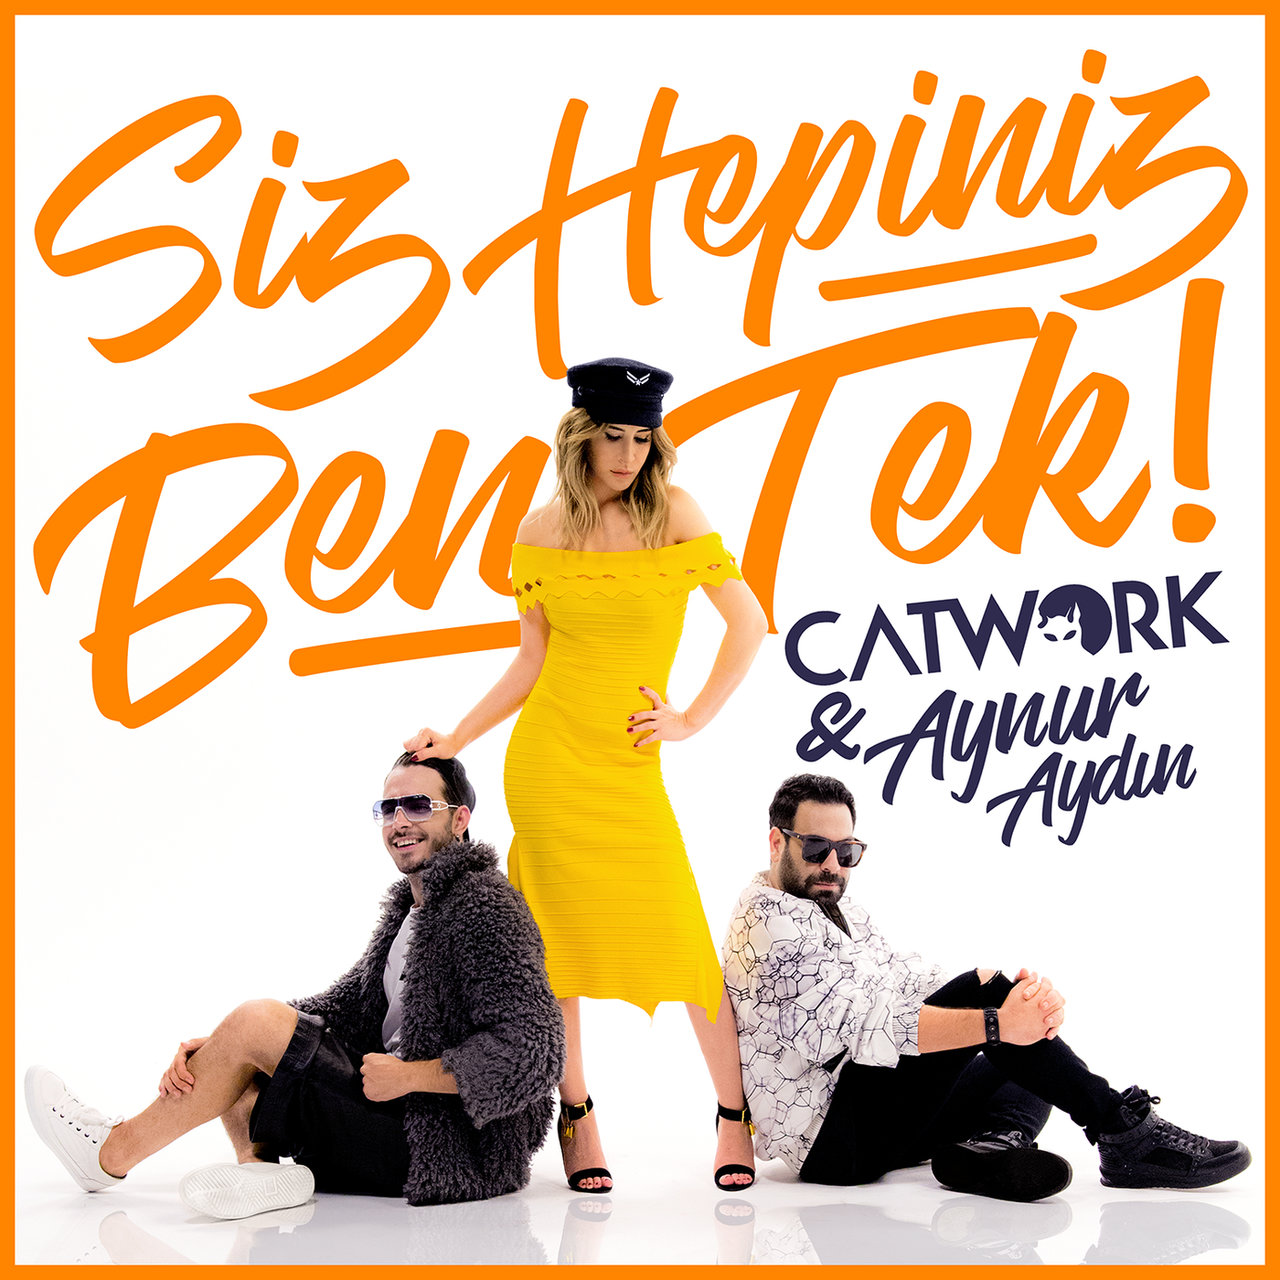 Catwork featuring Aynur Aydın — Siz Hepiniz Ben Tek cover artwork